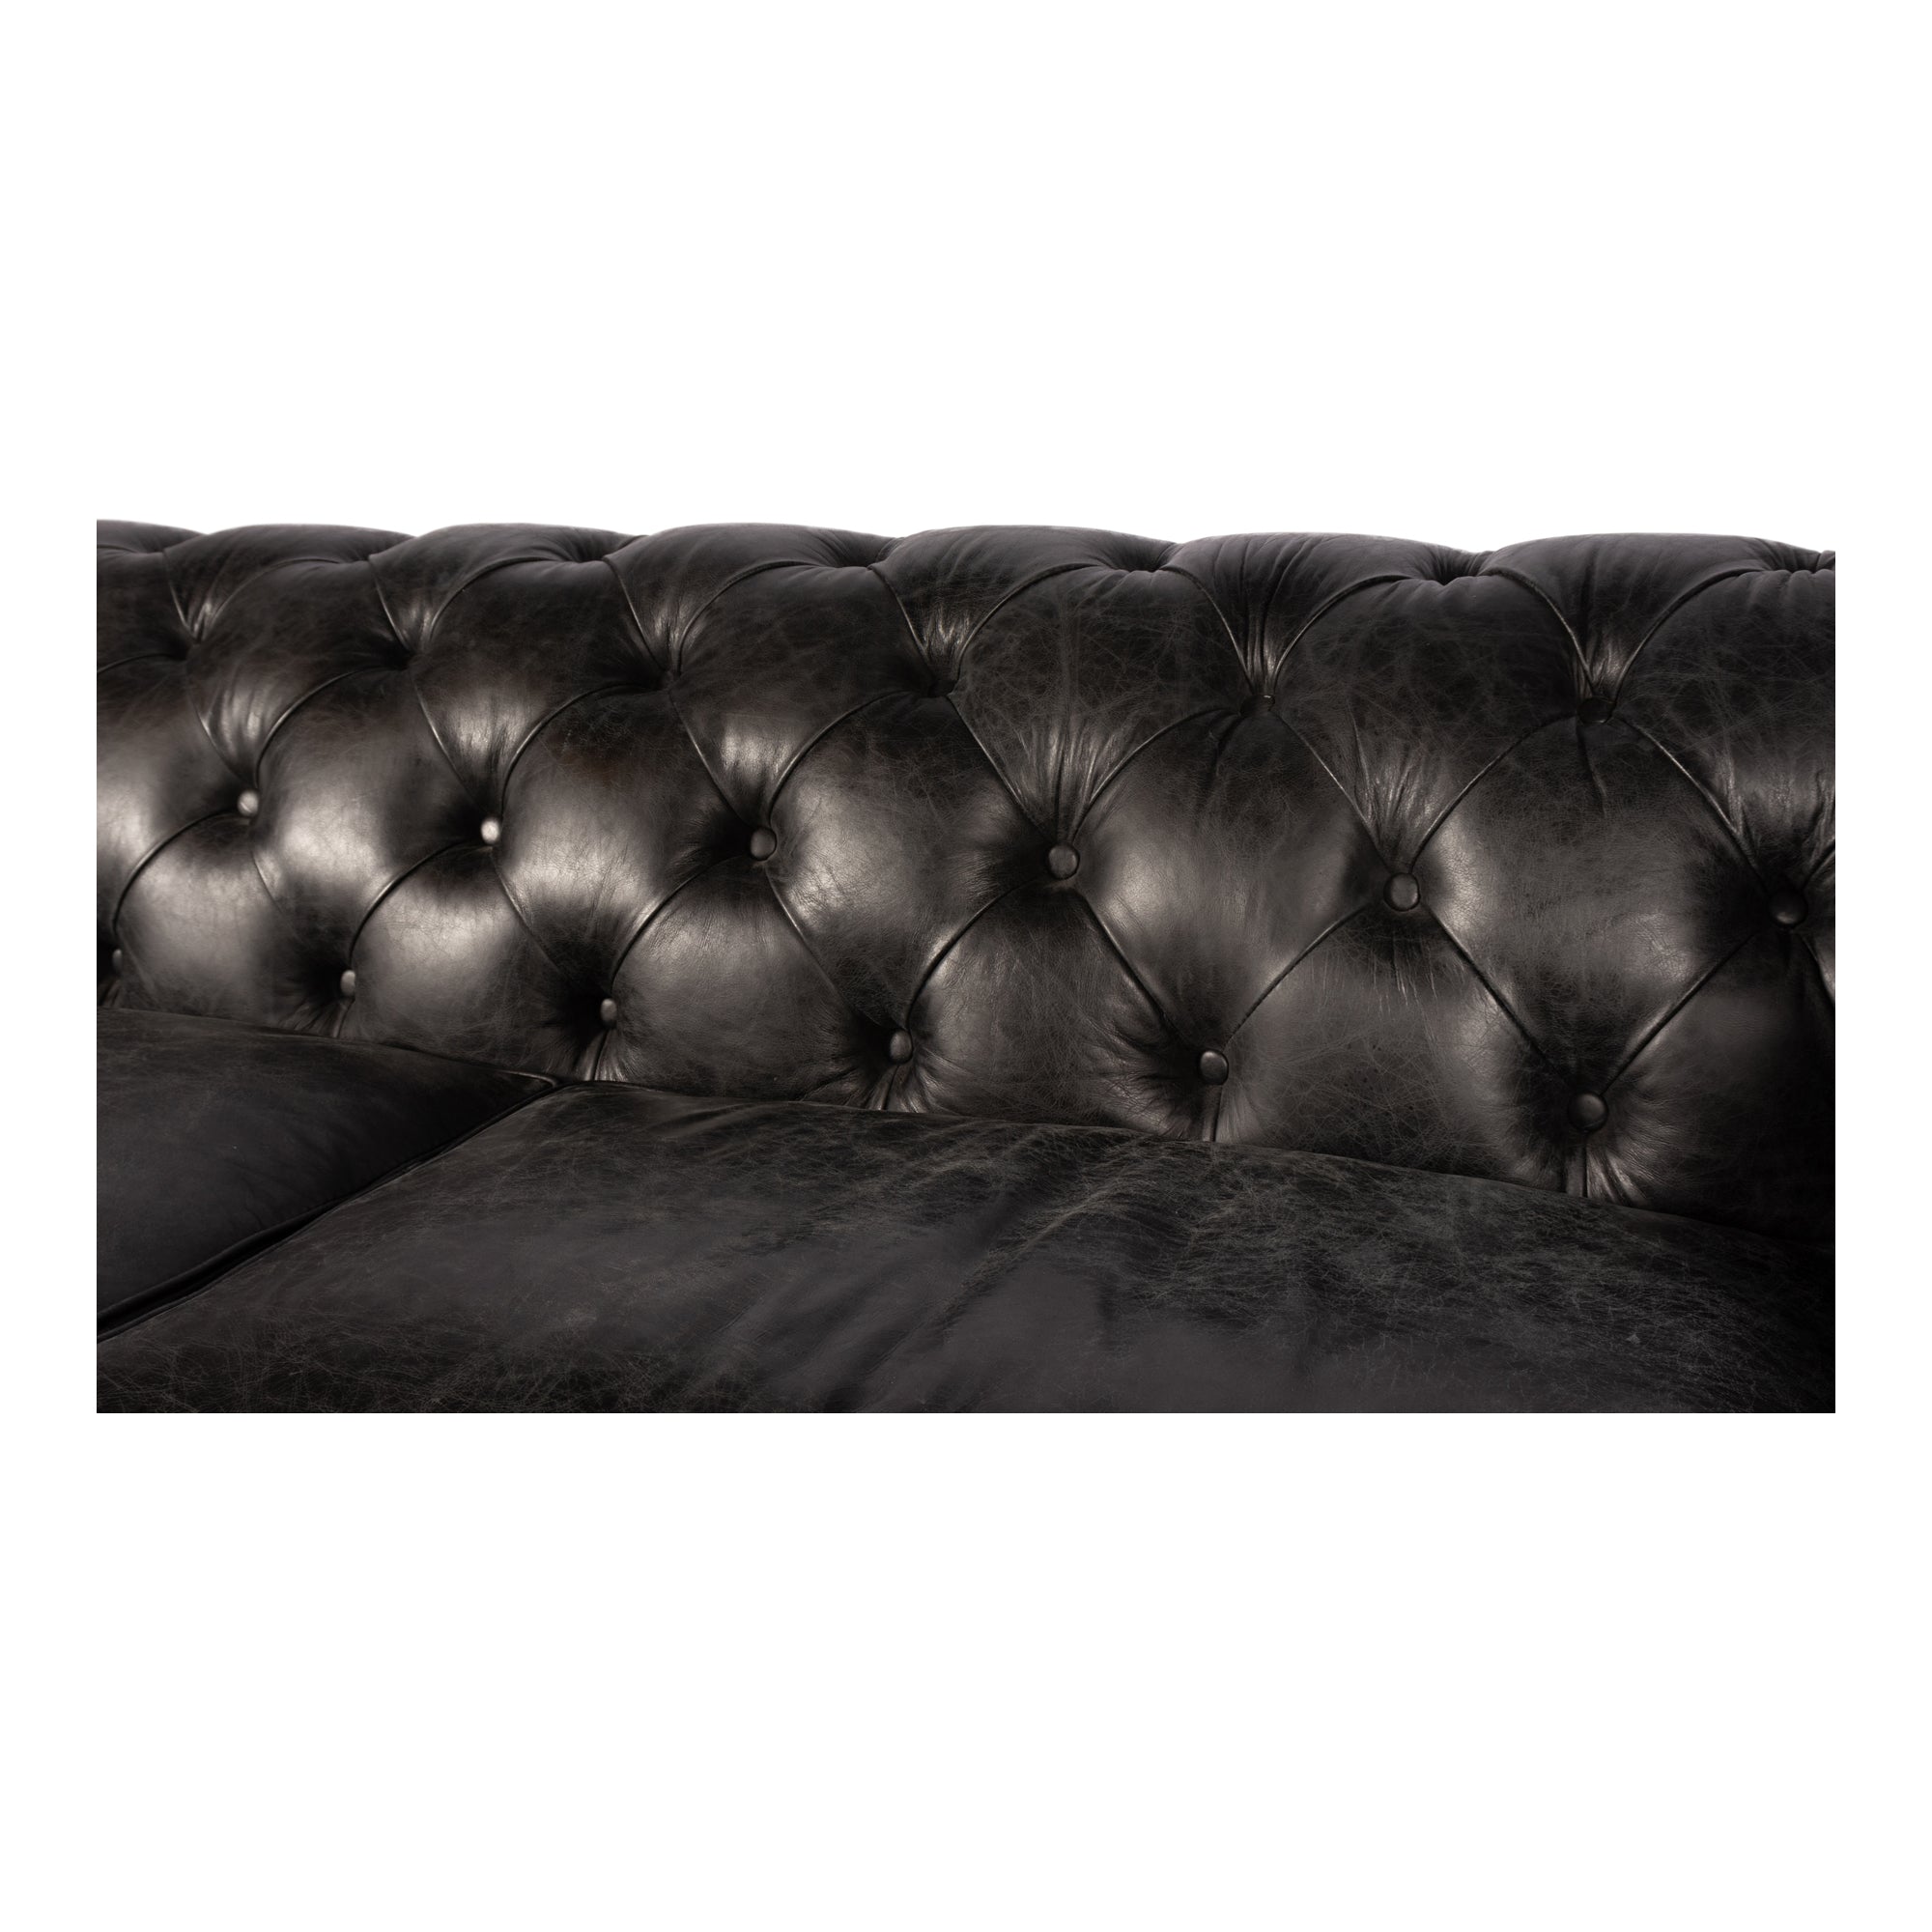 Birmingham Sofa Black Leather